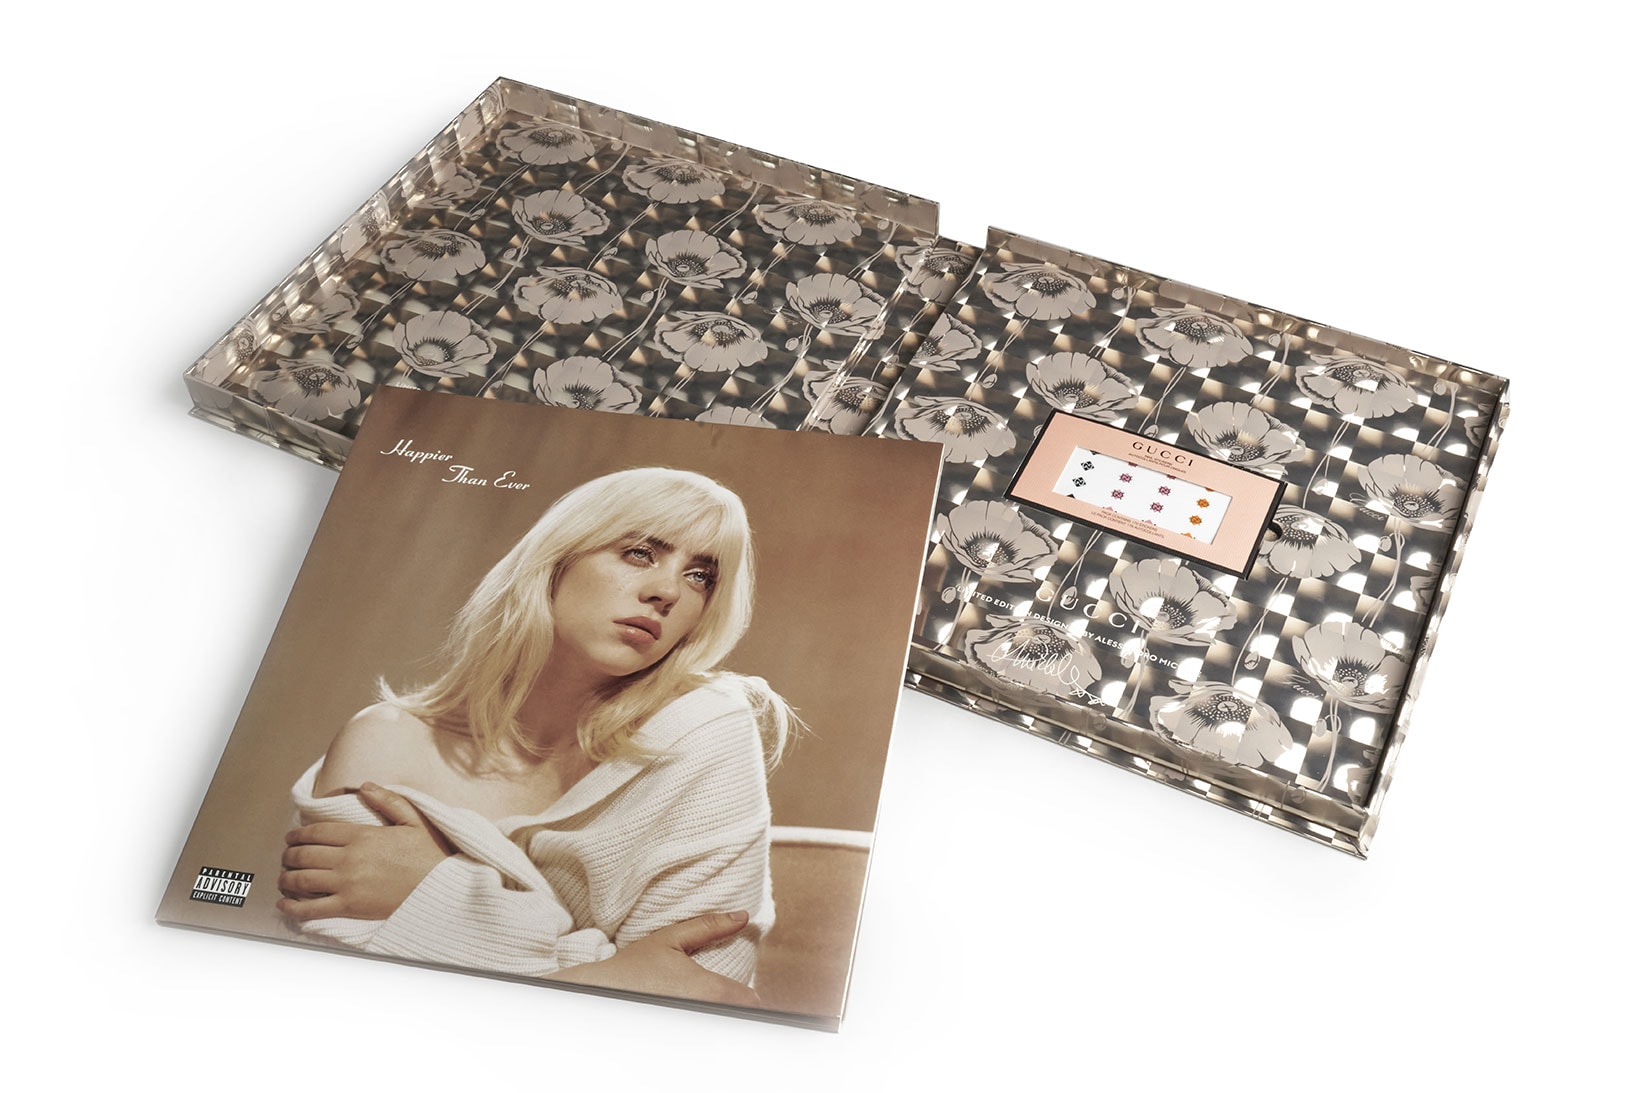 Billie Eilish Gucci Vinyl Happier Than Ever Album Box Packaging Nail Stickers